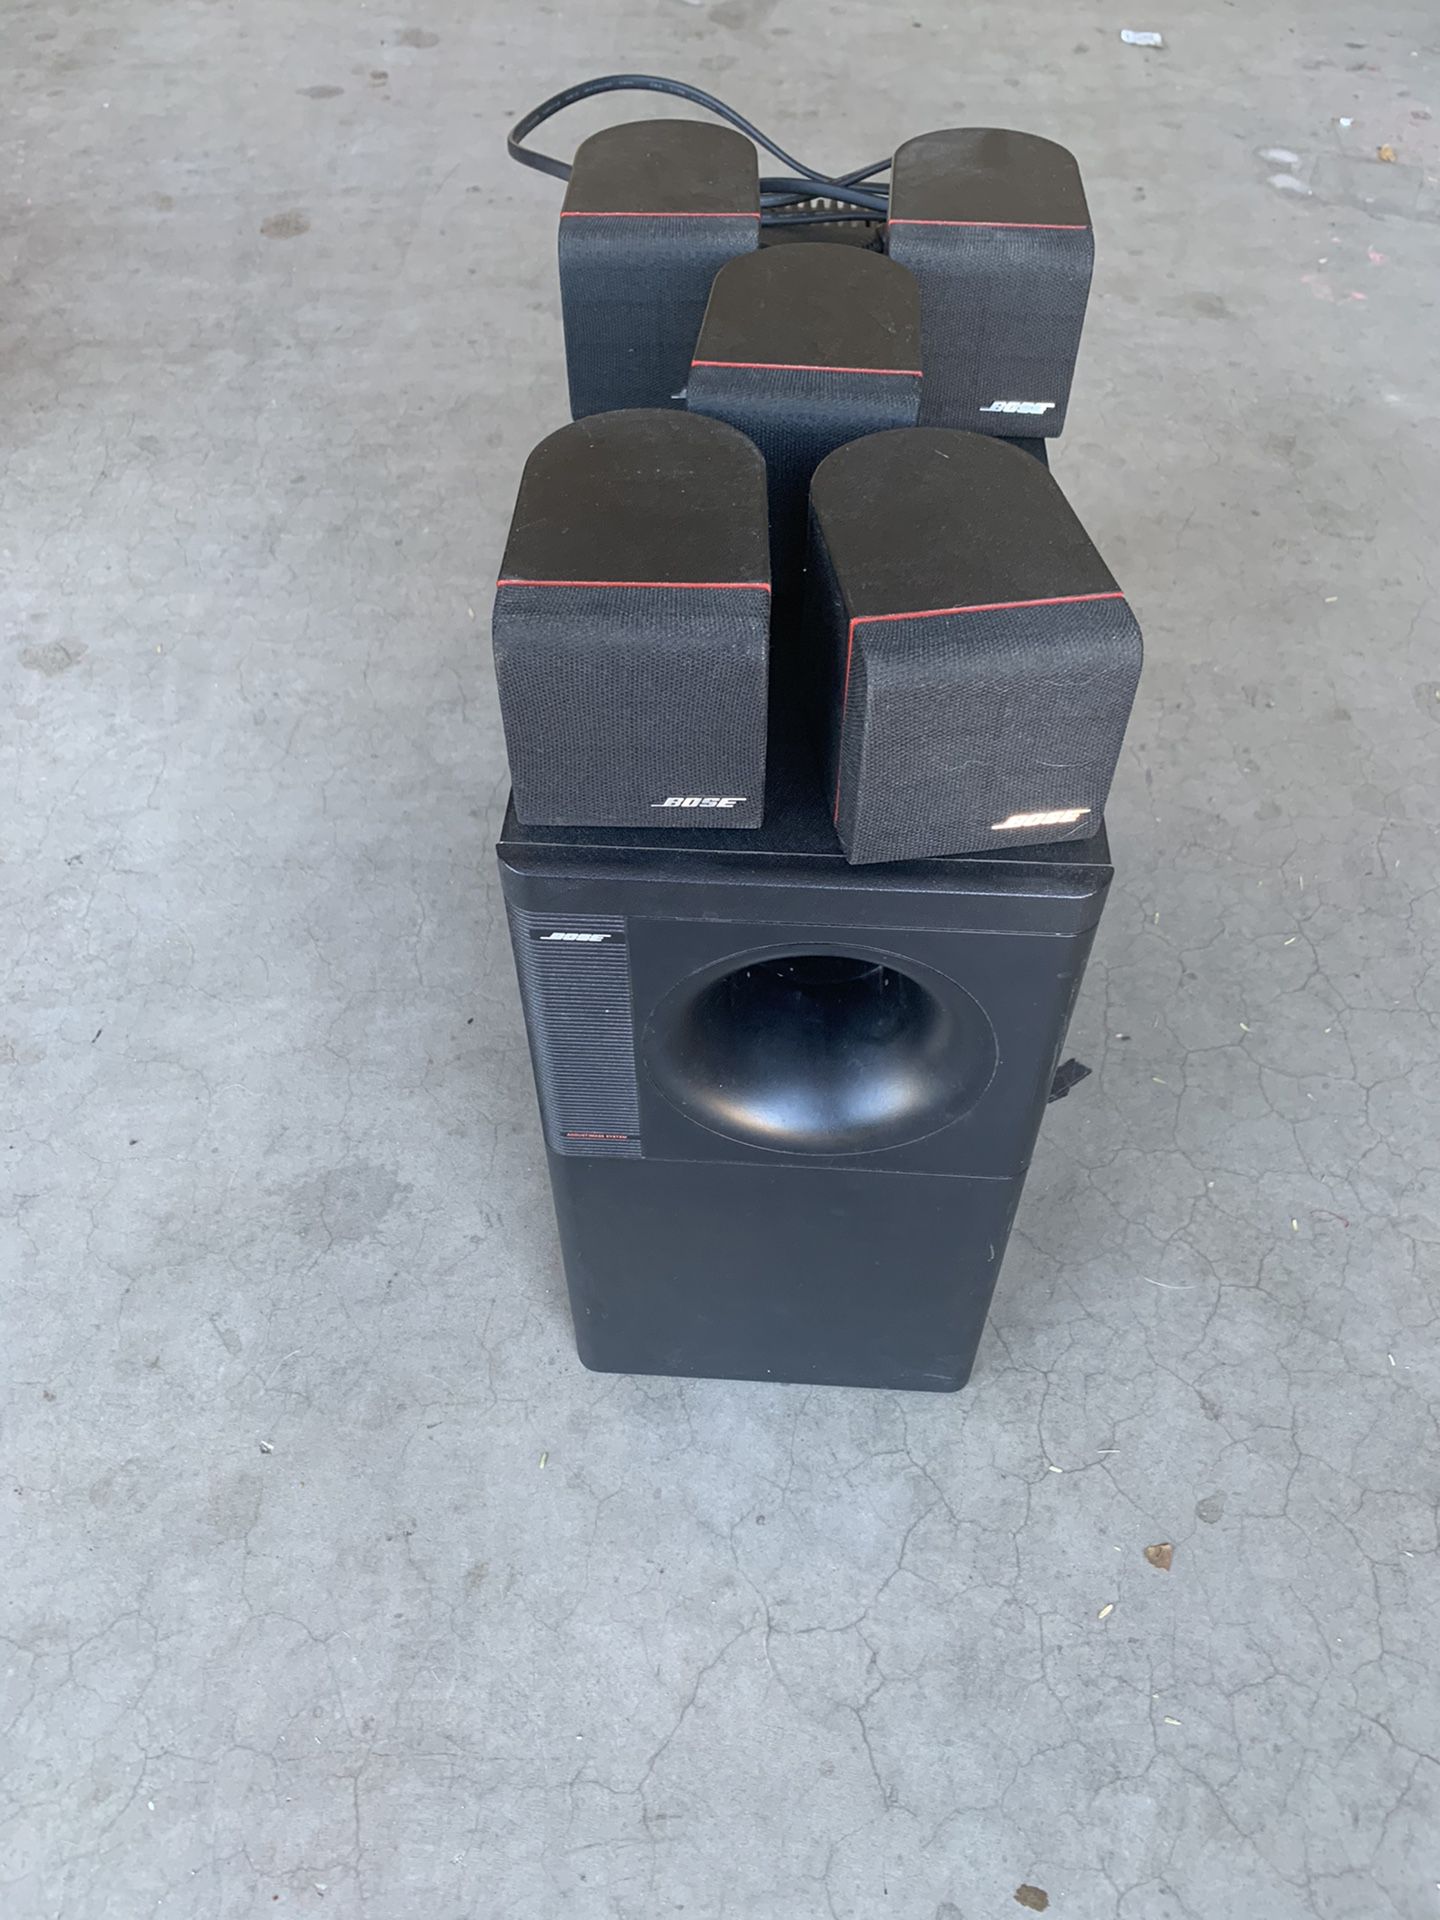 Bose lifestyle 5 speakers